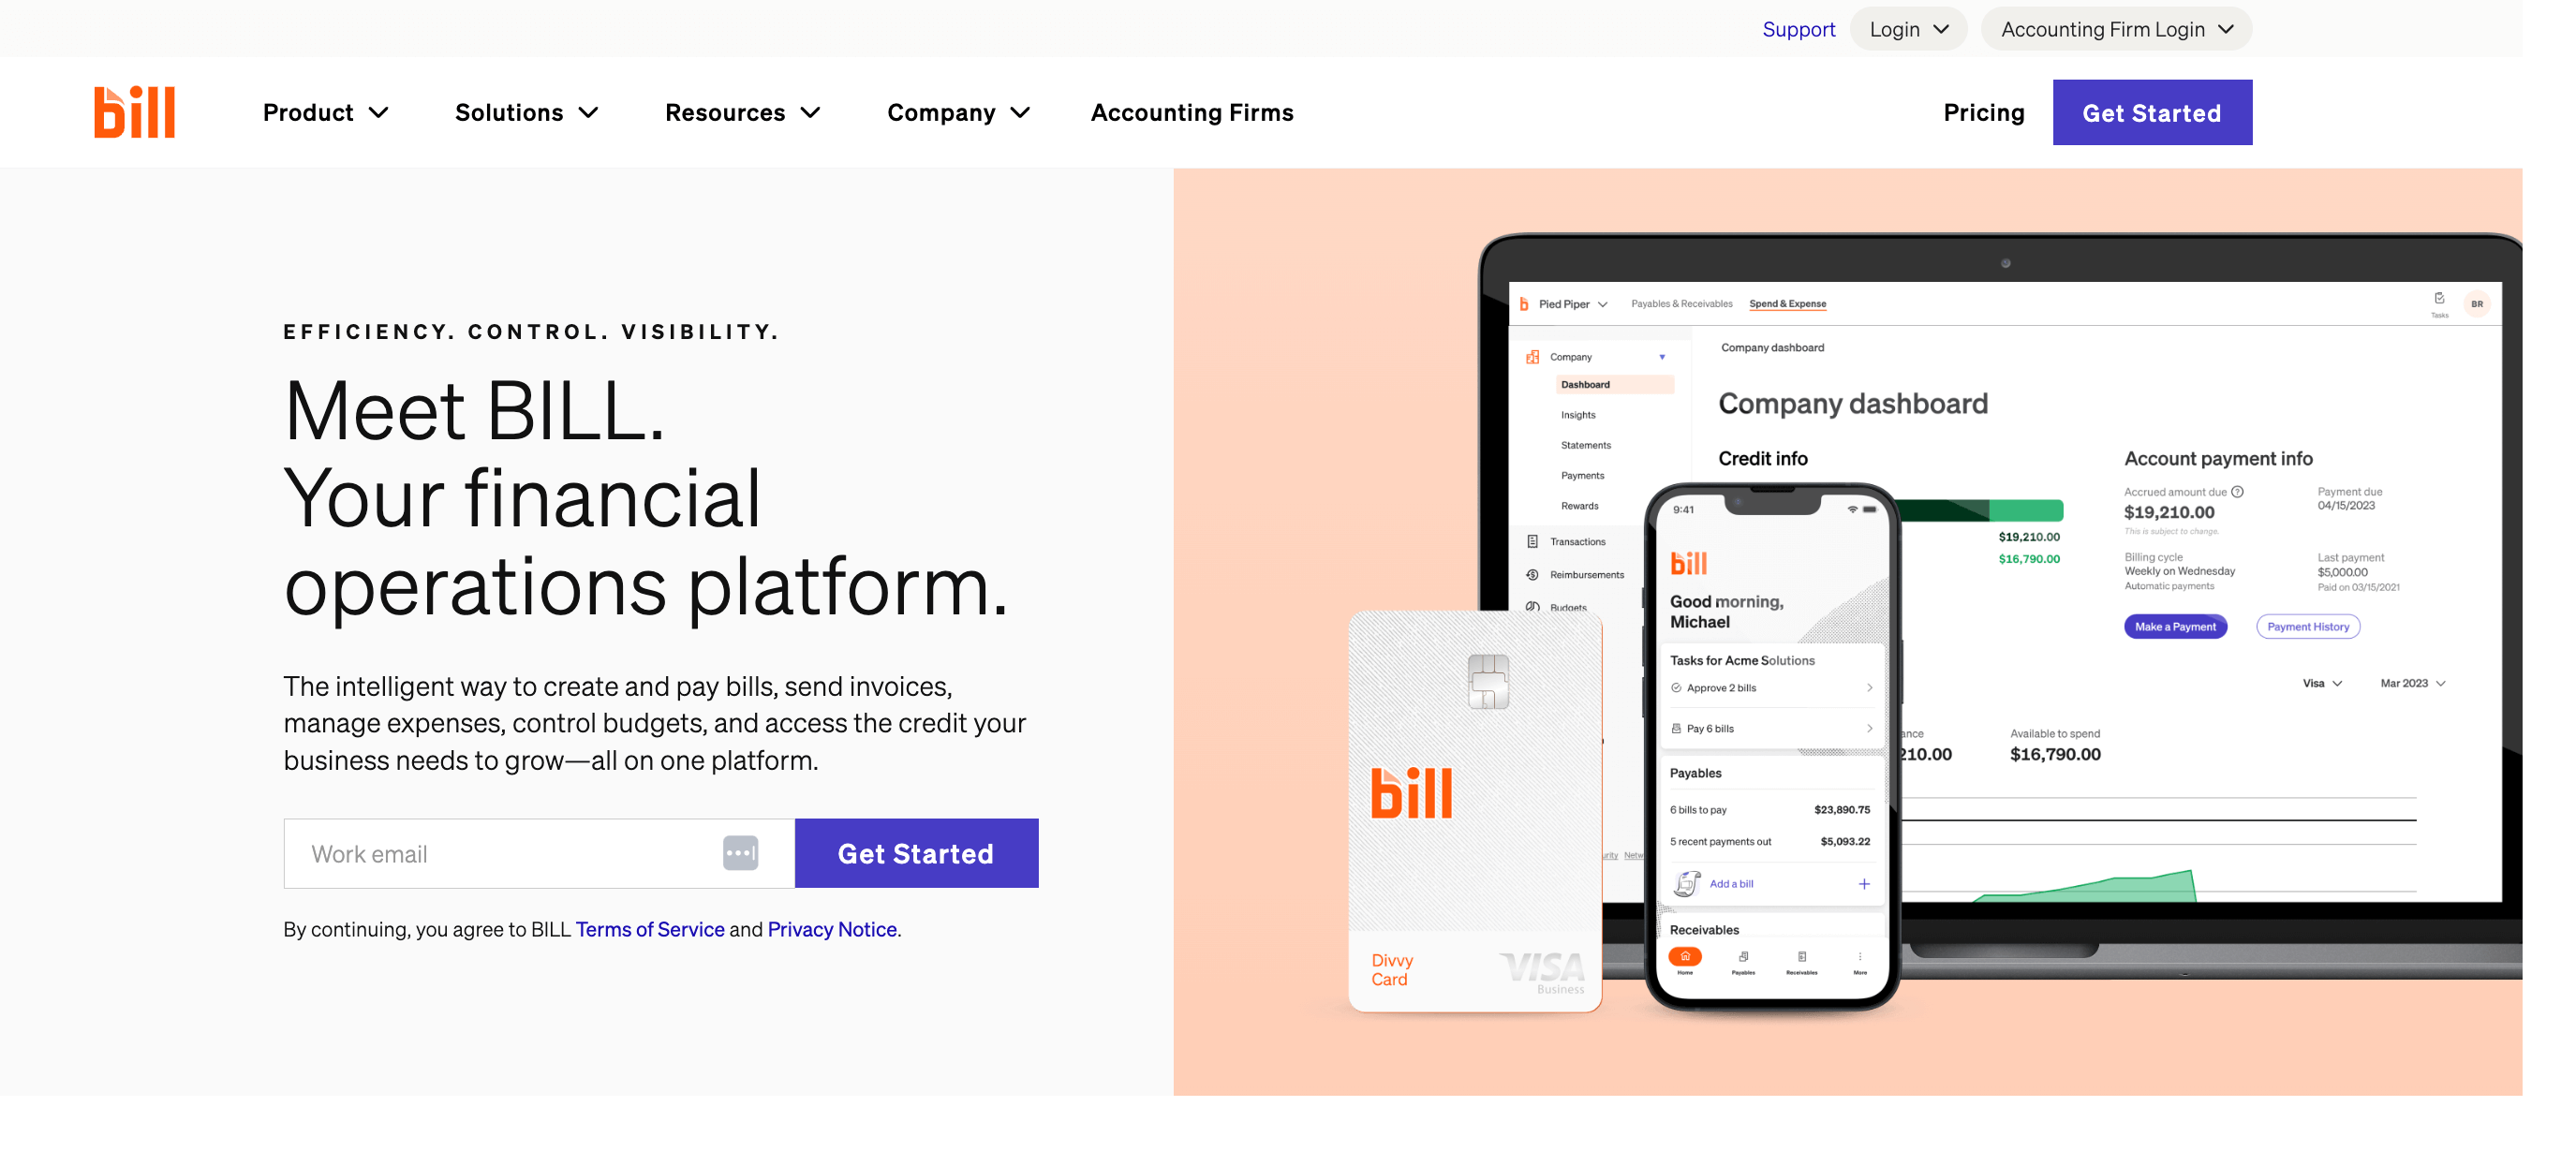 Bill homepage: Meet BILL. Your financial operations platform.